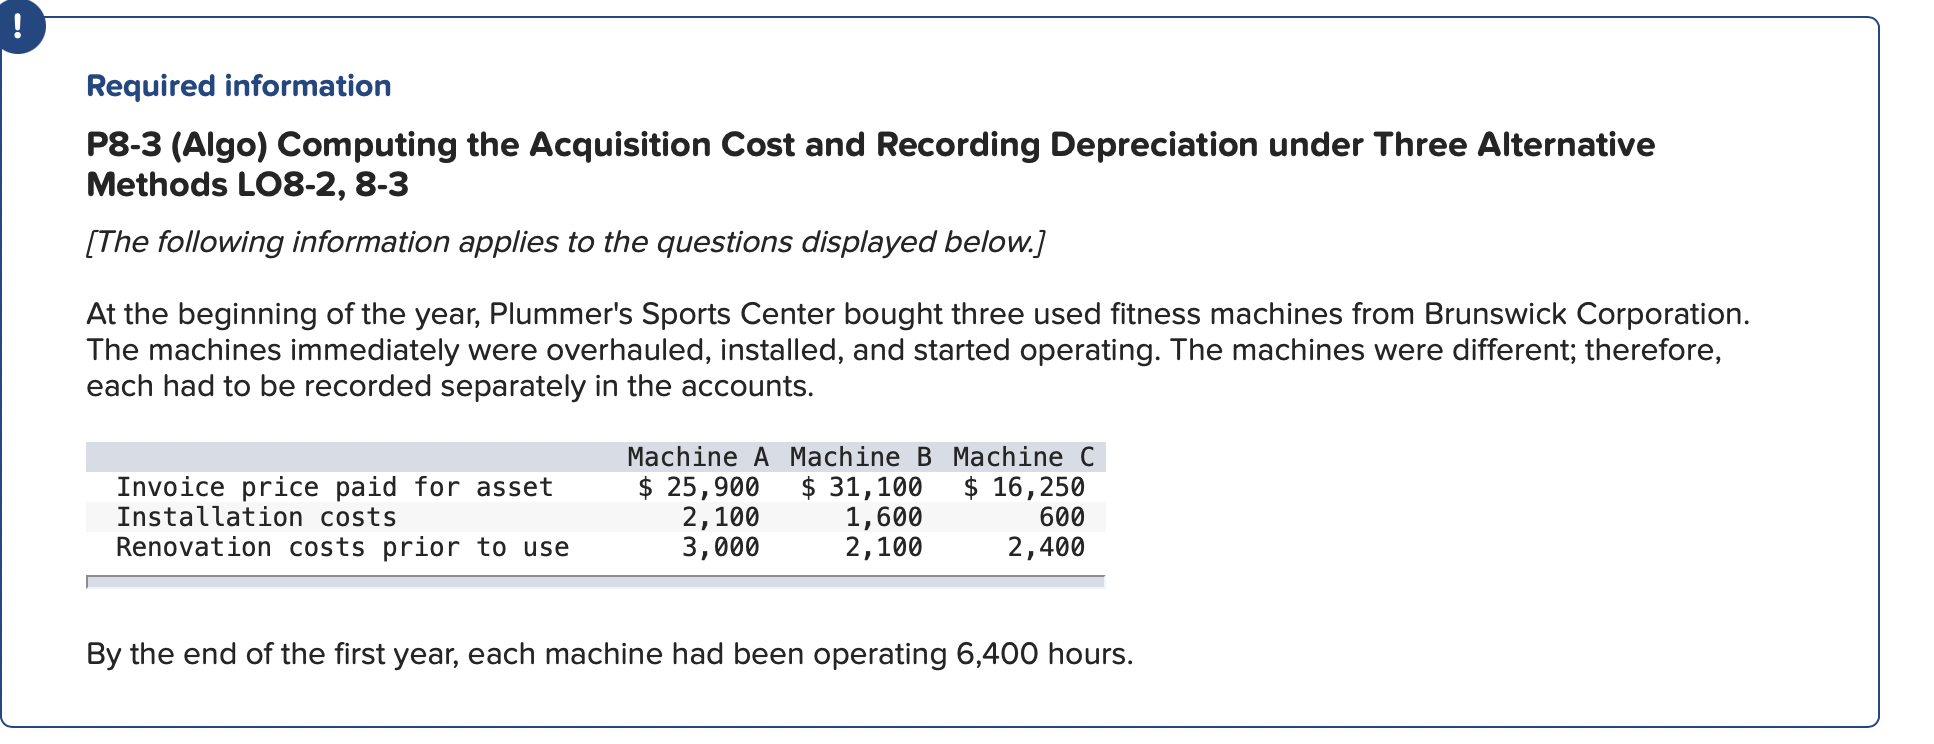 Required information
P8-3 (Algo) Computing the Acquisition Cost and Recording Depreciation under Three Alternative Methods LO